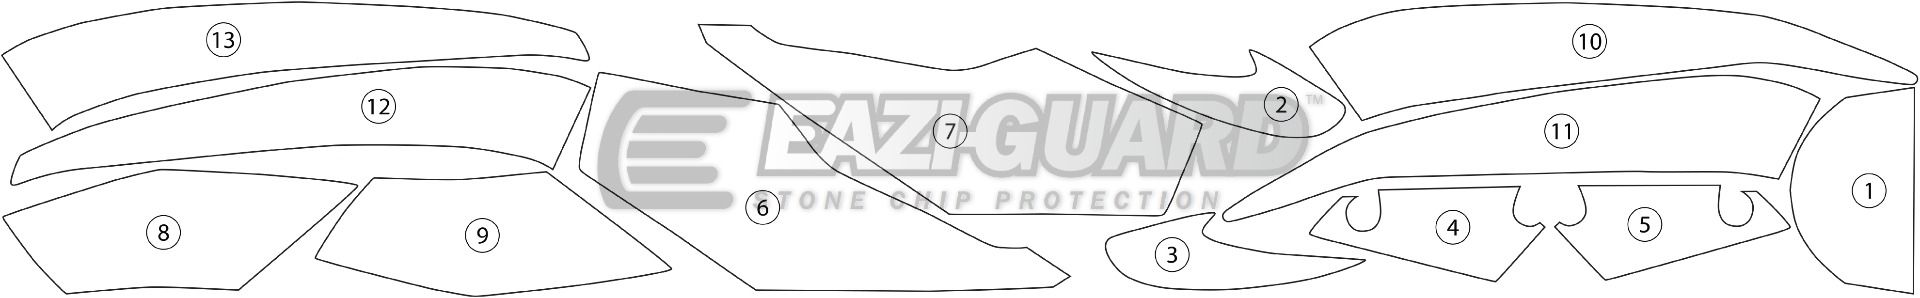 Eazi-Guard Paint Protection Film for Honda CBR650F (2014-2018) GUARDHON004